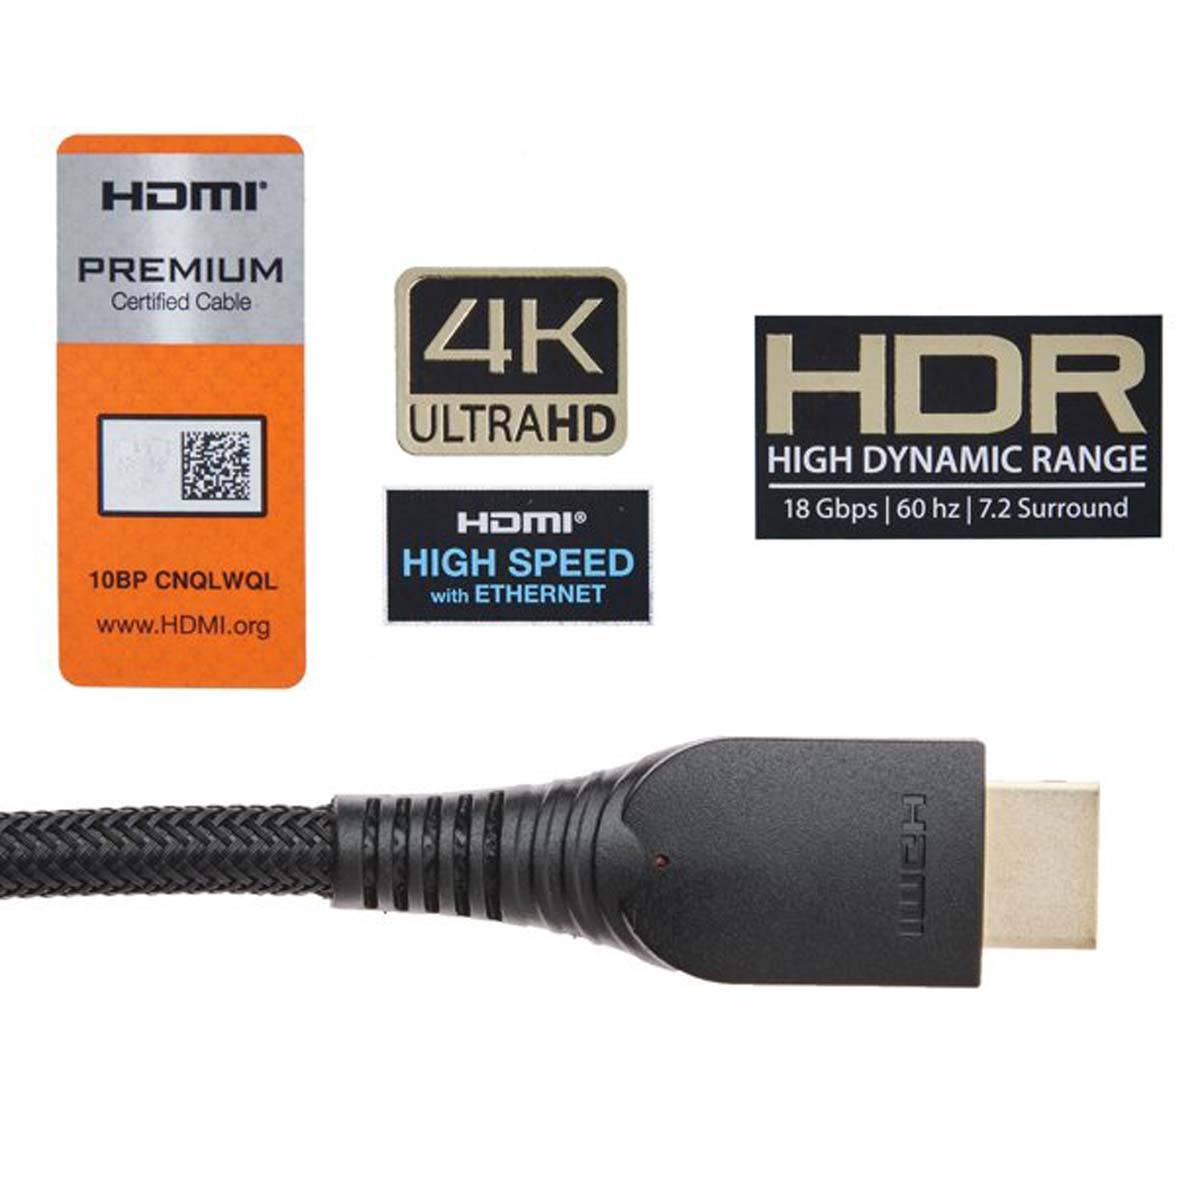 VIVANCO 47100 HDMI Kabel